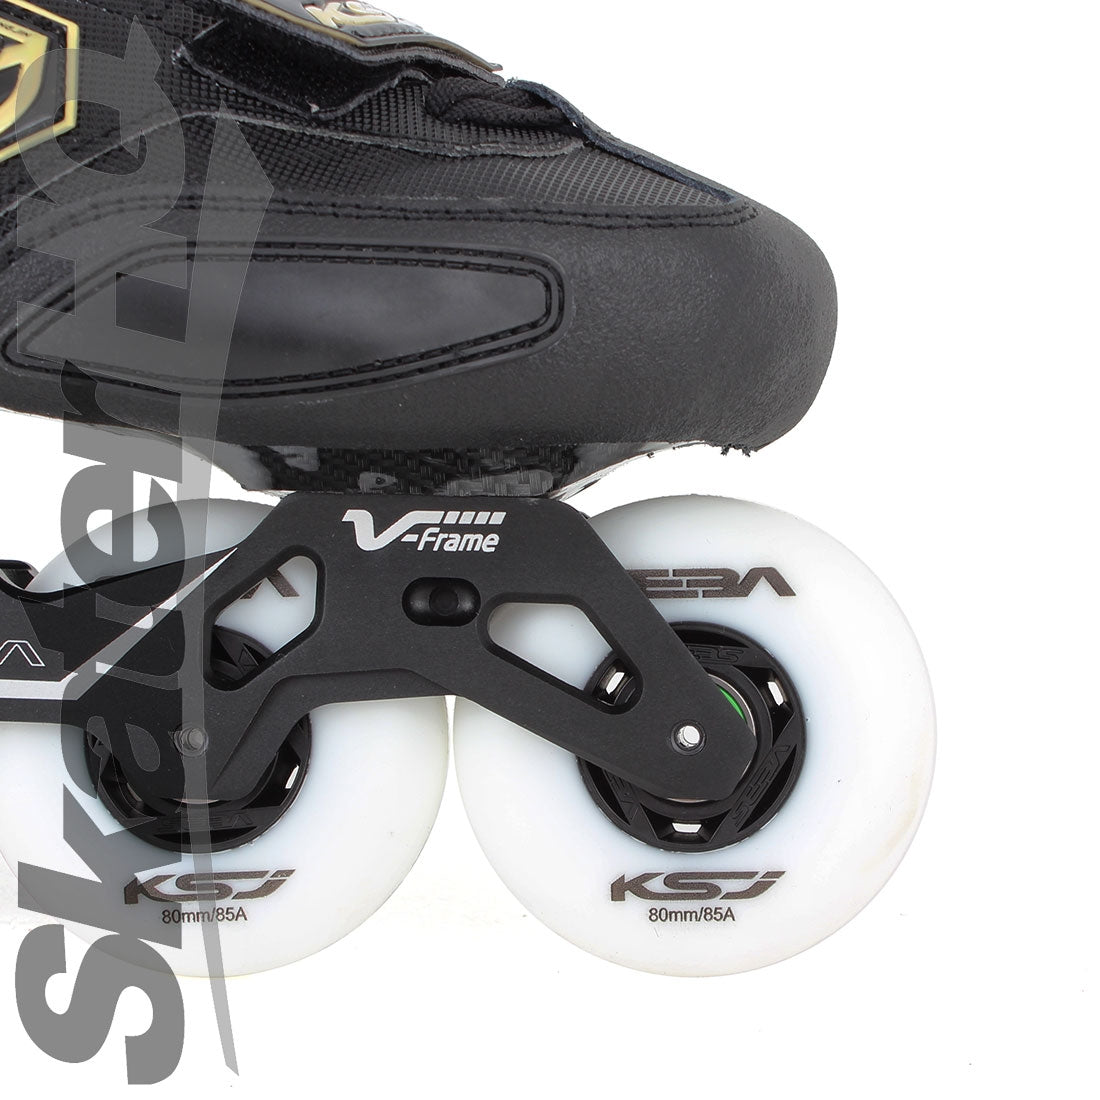 SEBA KSJ 2 Black 7.5US/ EU40 Inline Rec Skates